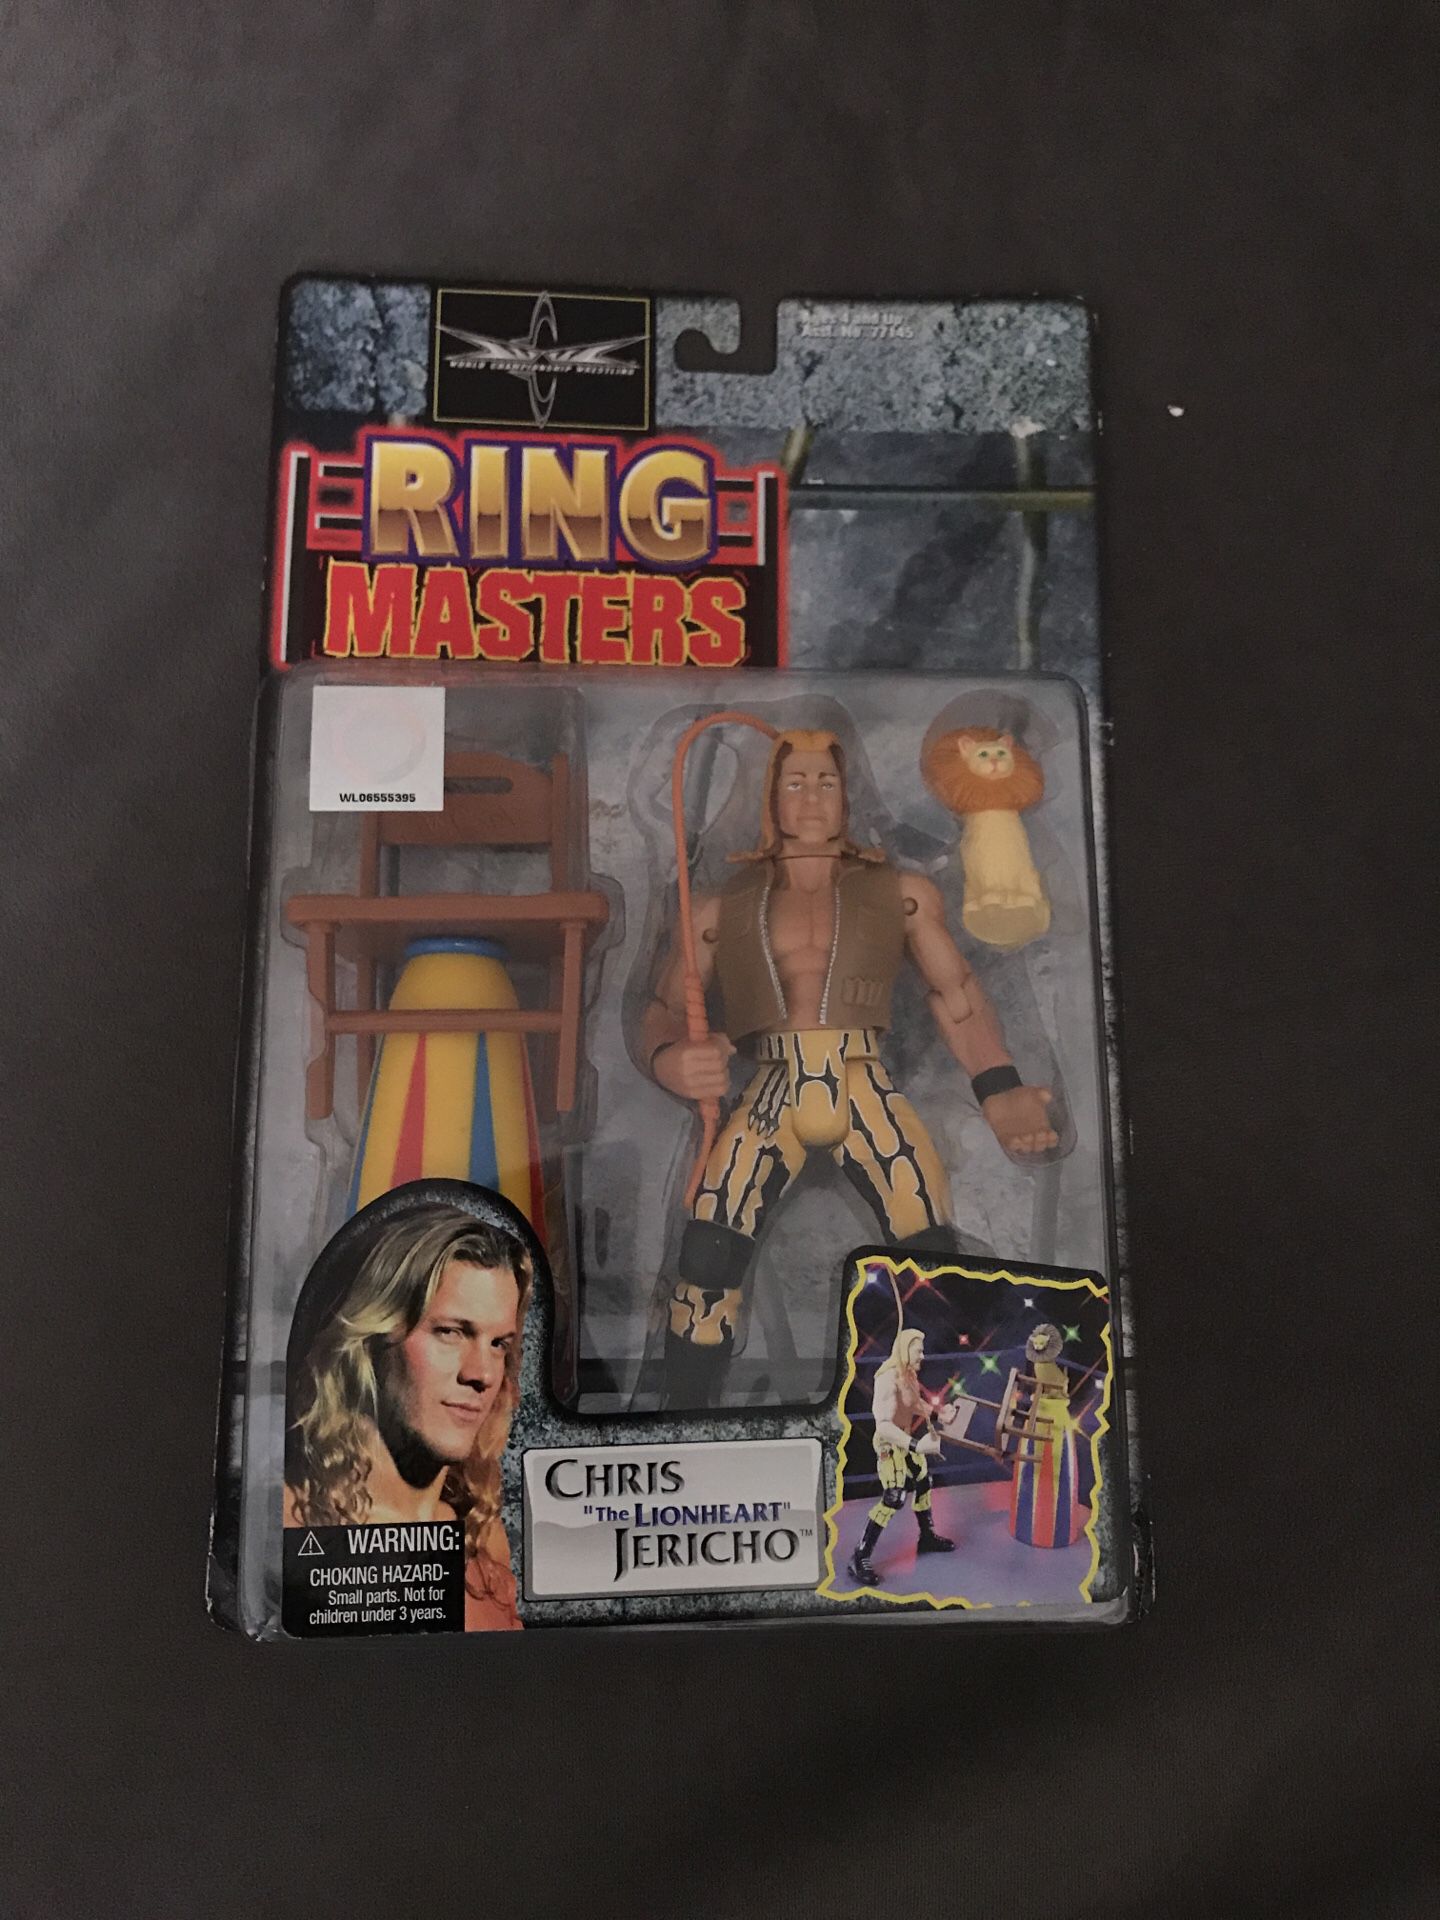 Chris Jericho WCW 1999 Action Figure